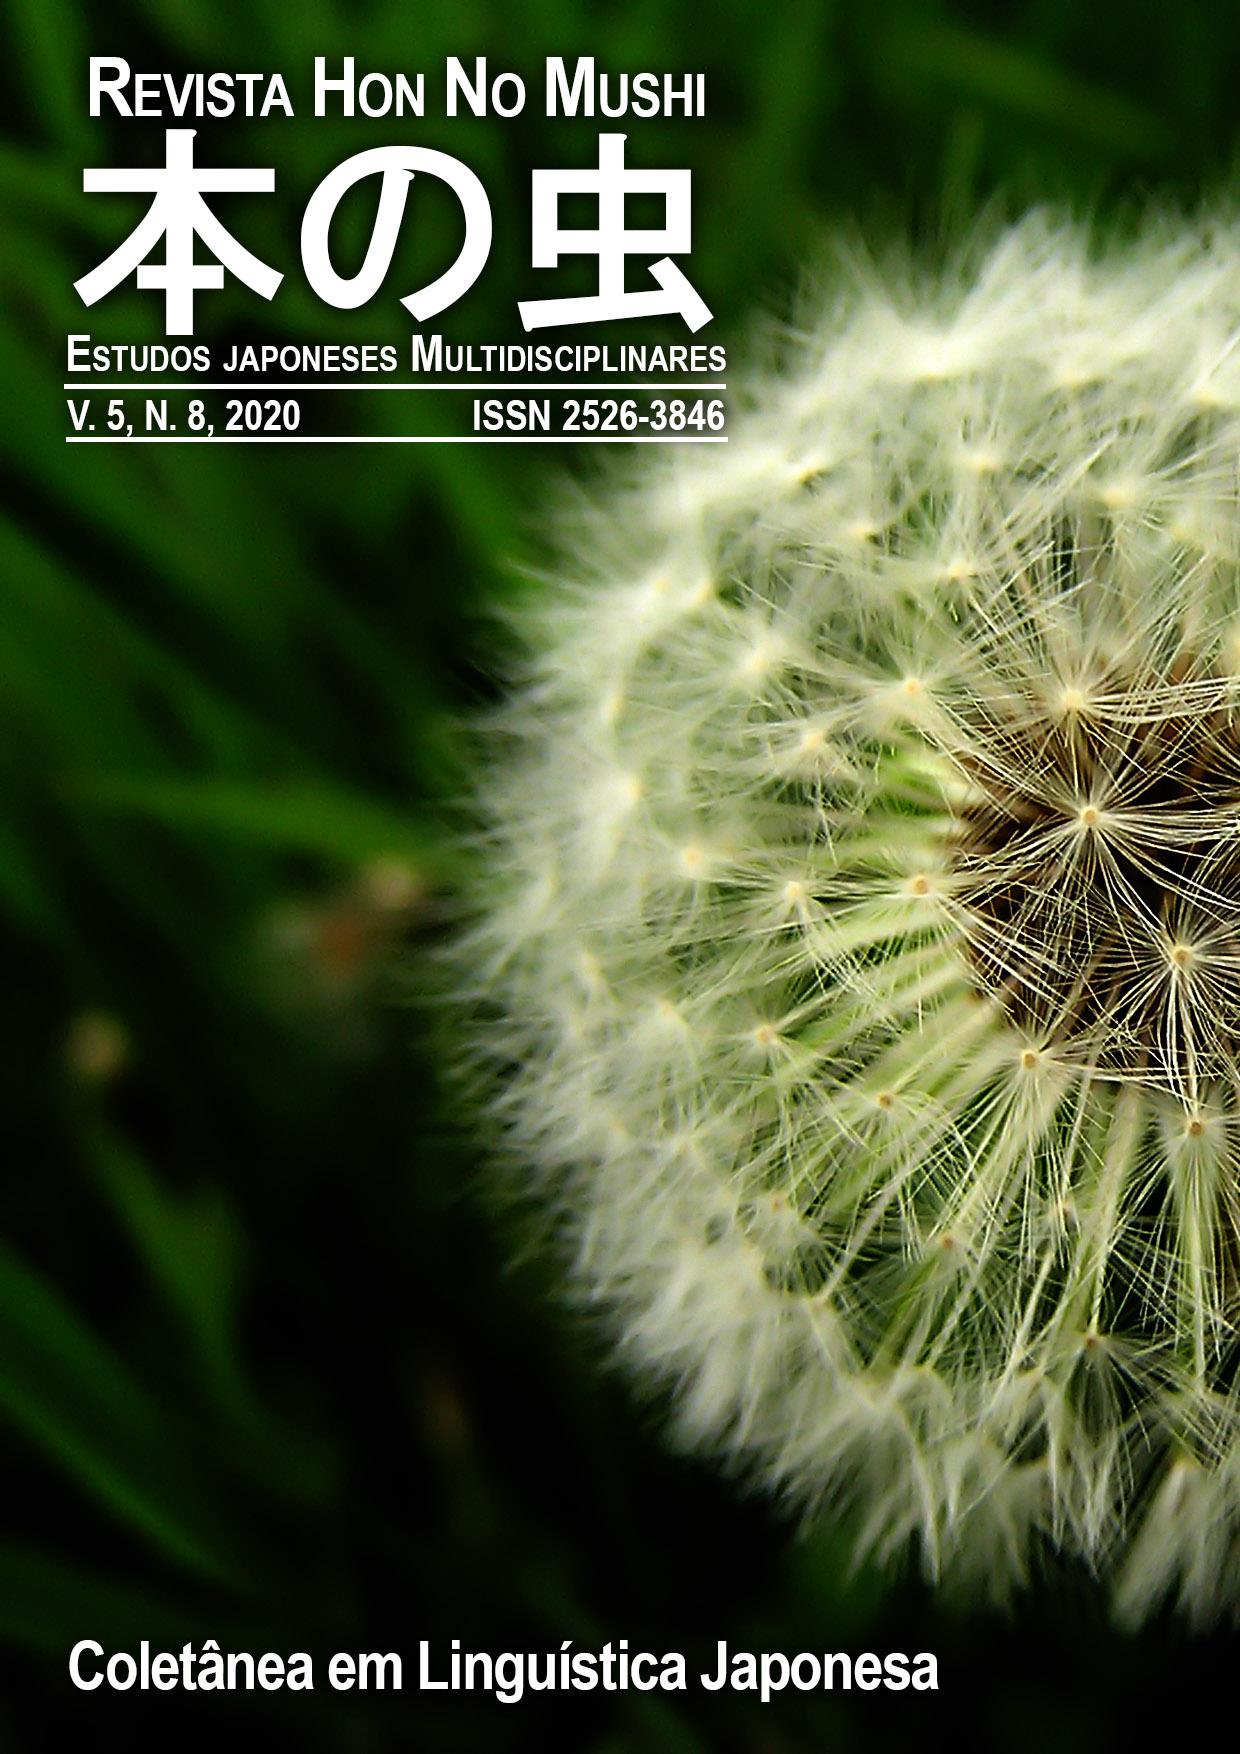 					Visualizar v. 5 n. 8 (2020): Hon No Mushi - Estudos Multidisciplinares Japoneses - Coletânea em Linguística Japonesa
				